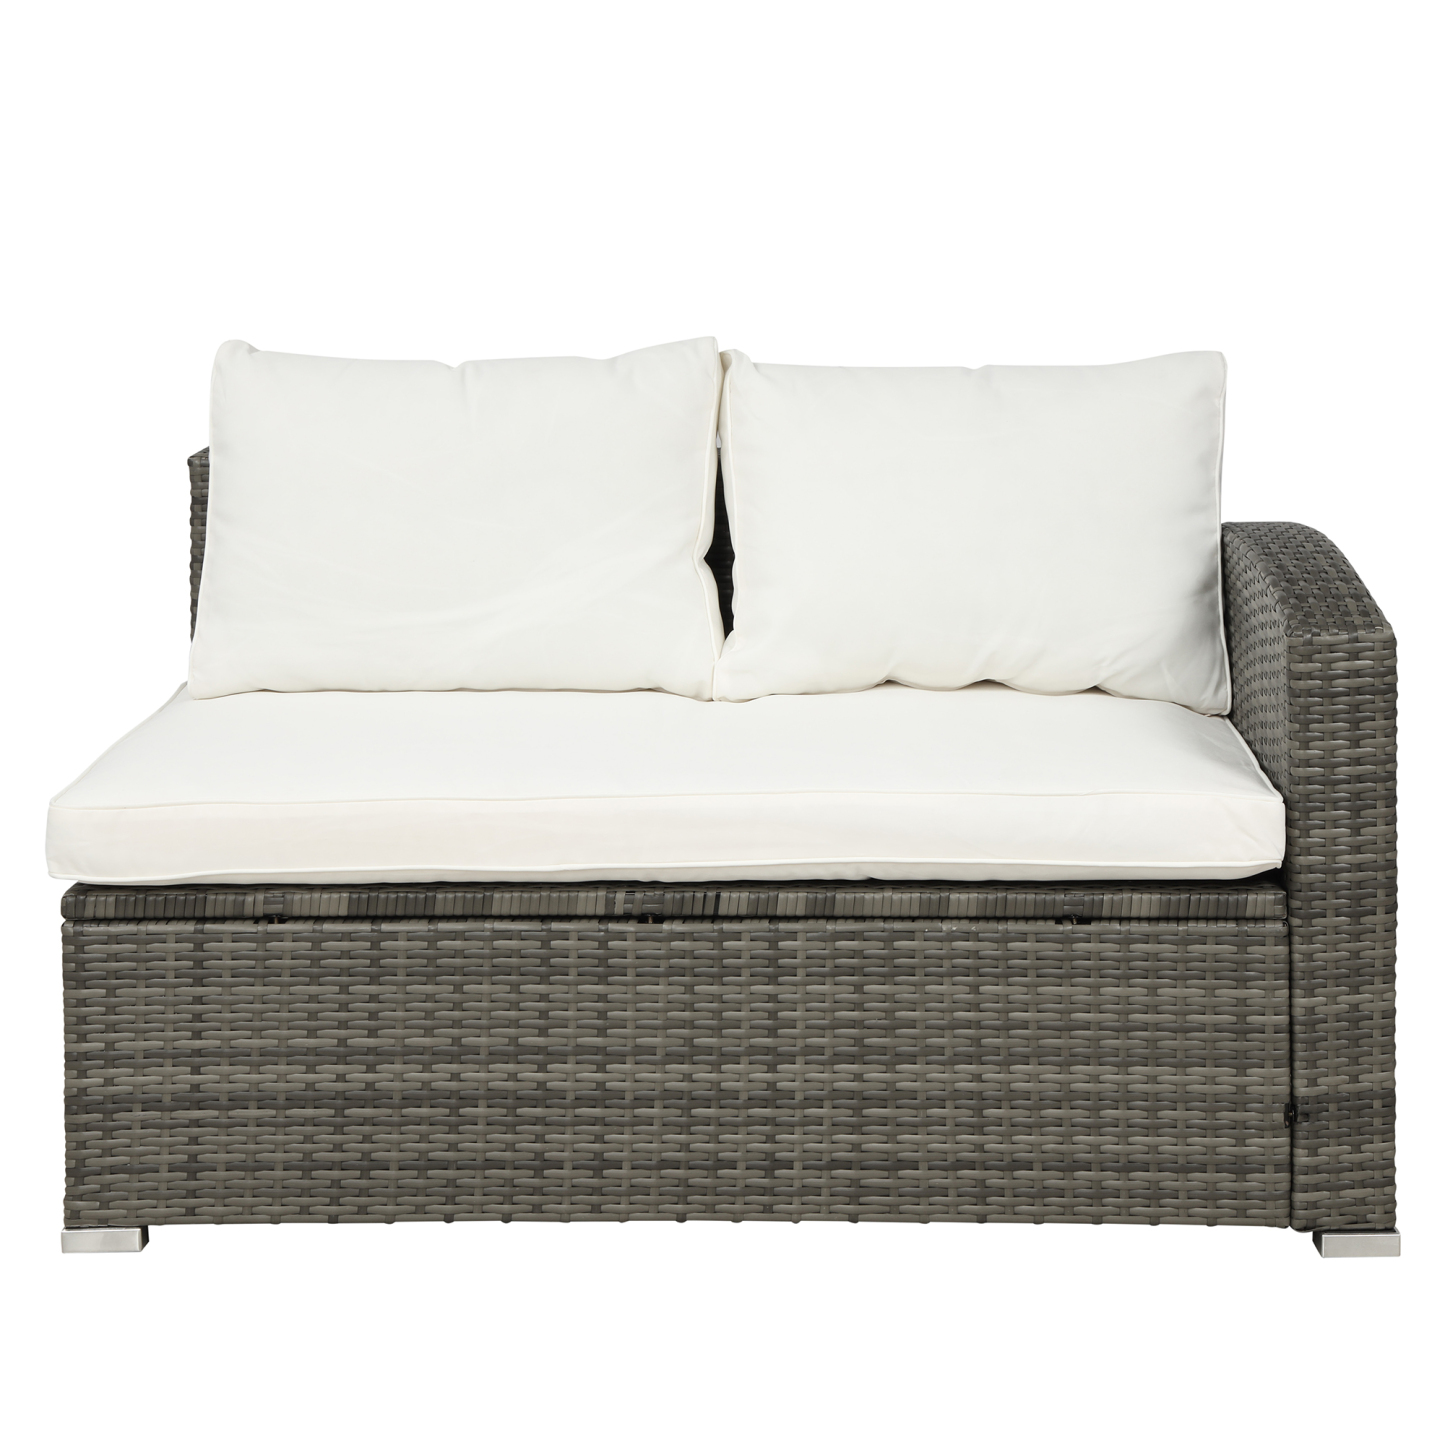 Mondawe 4 PCS Outdoor Cushioned PE Rattan Wicker Sectional Sofa Set Garden Patio Furniture Set (Beige Cushion)-Mondawe